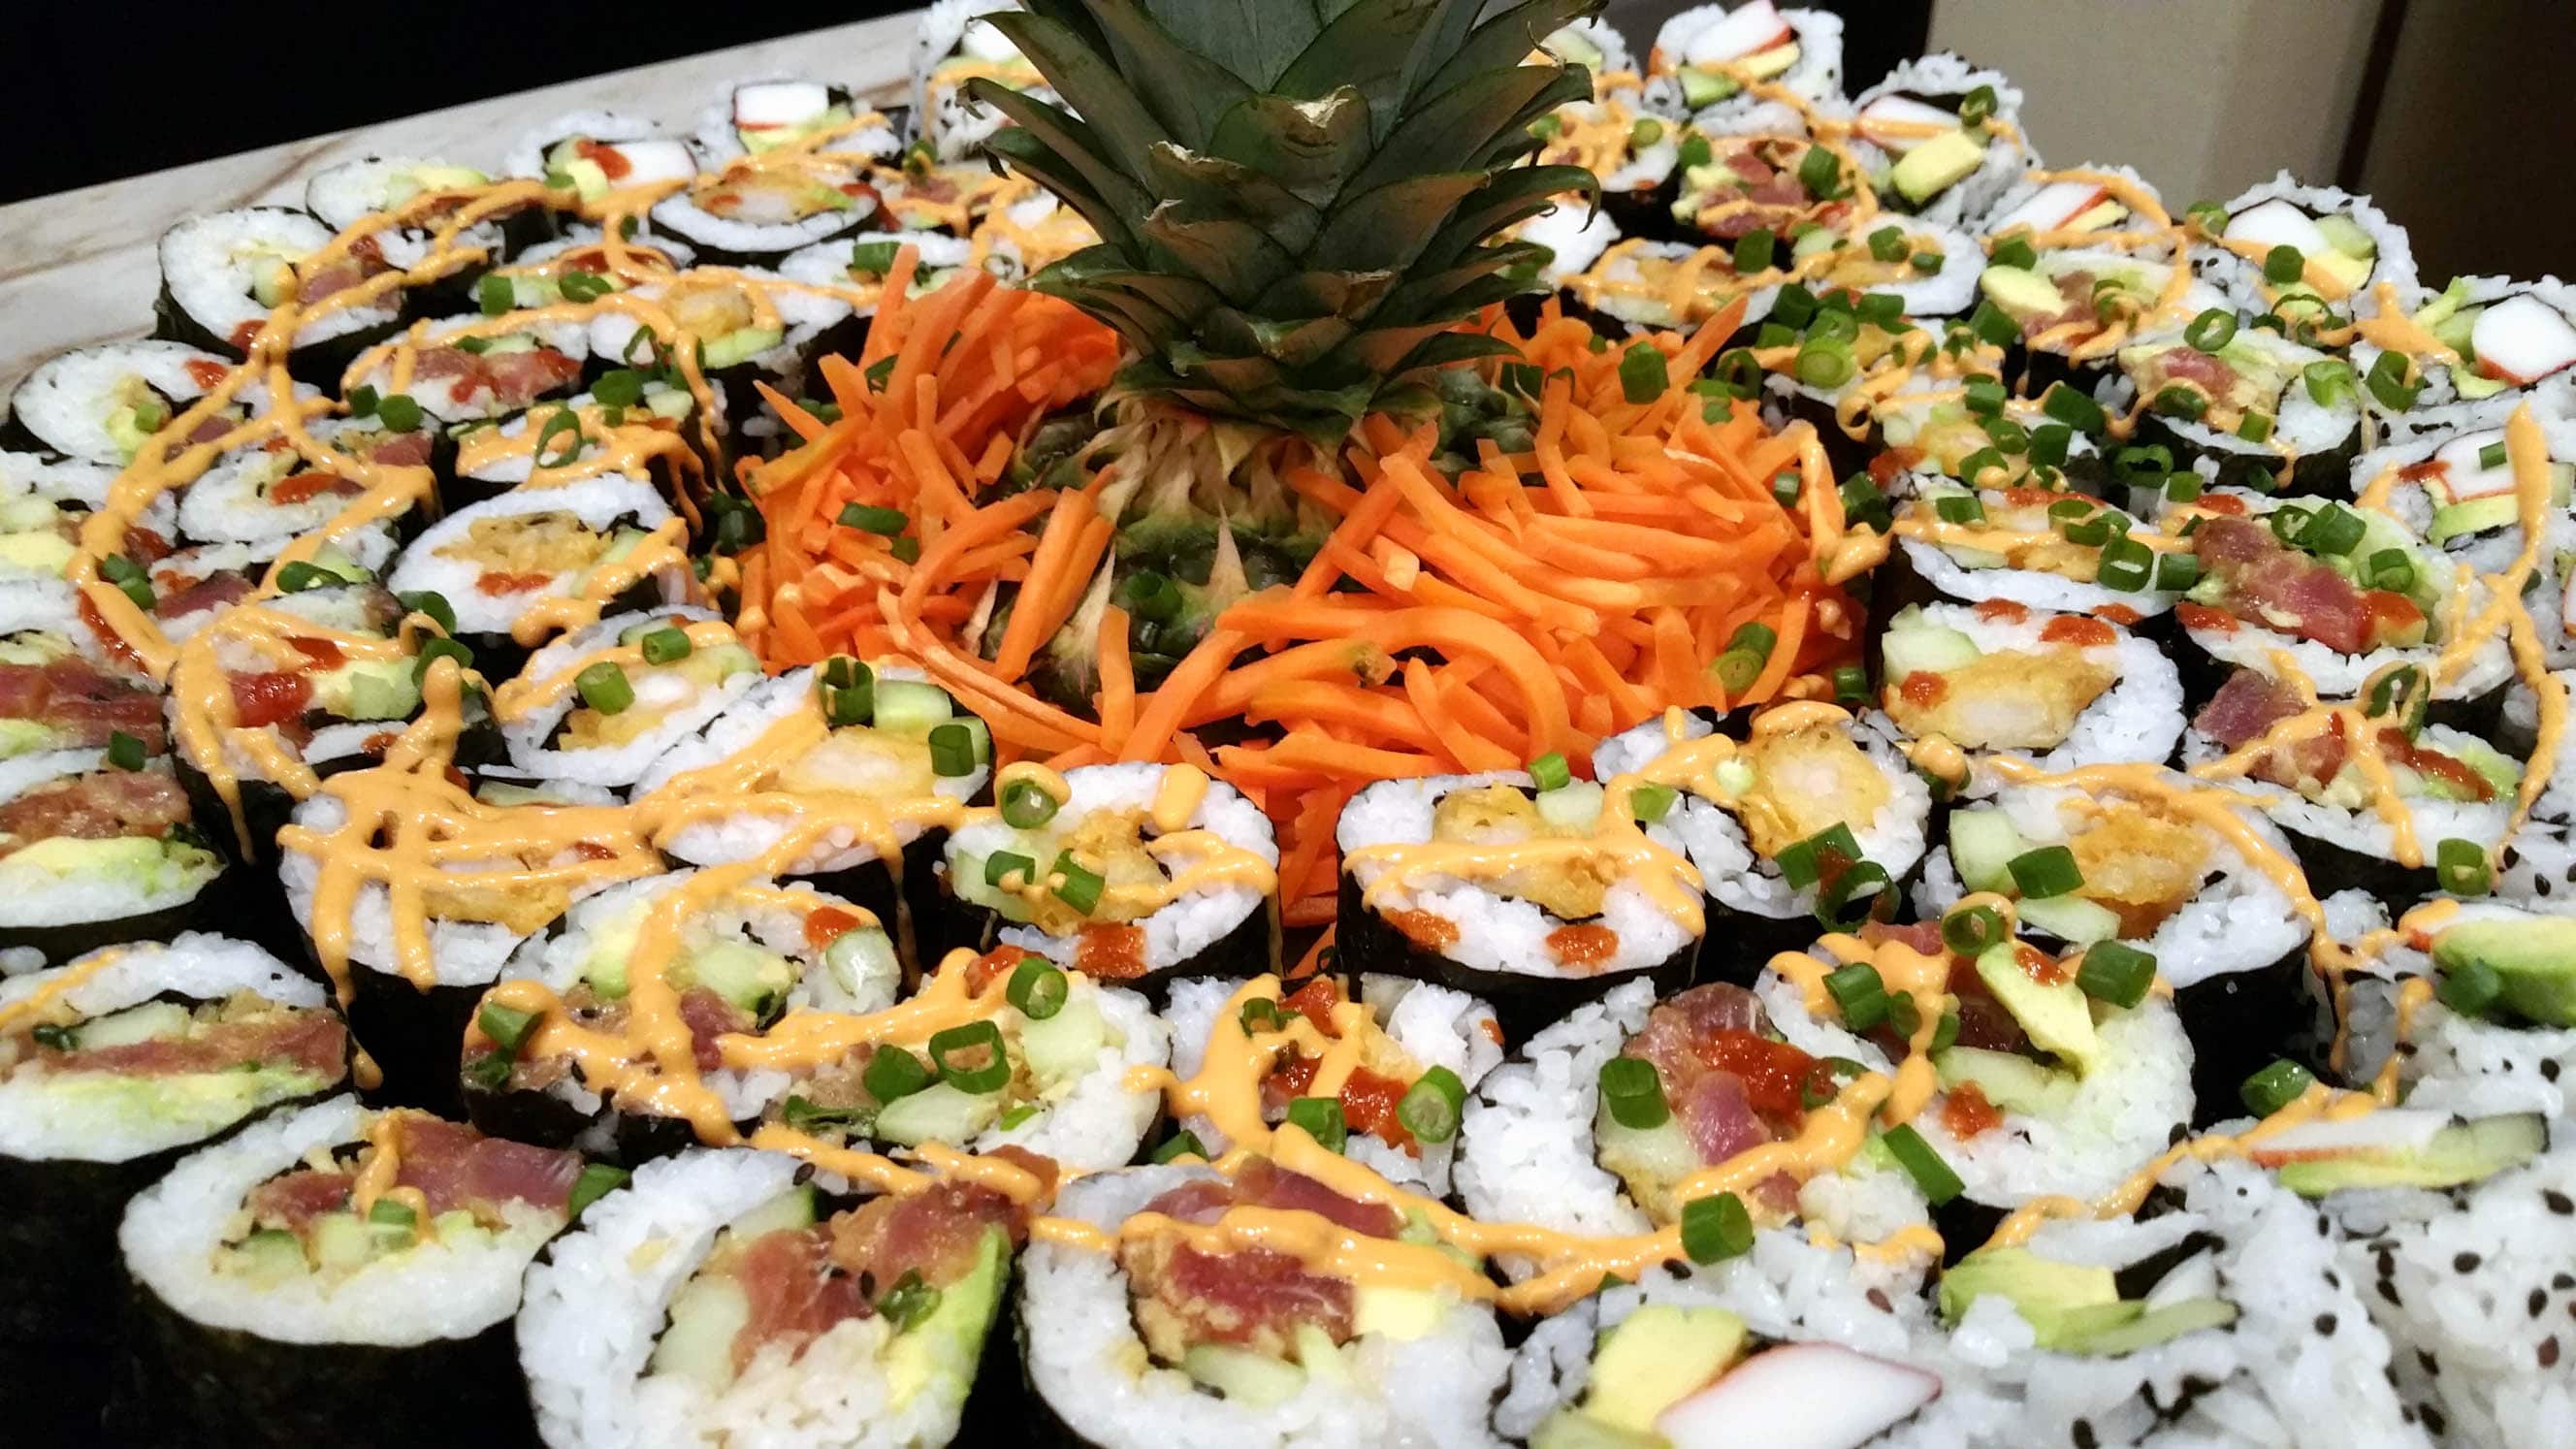 https://www.tampabaychef.com/wp-content/uploads/2014/08/sushi-platter-2015.jpg